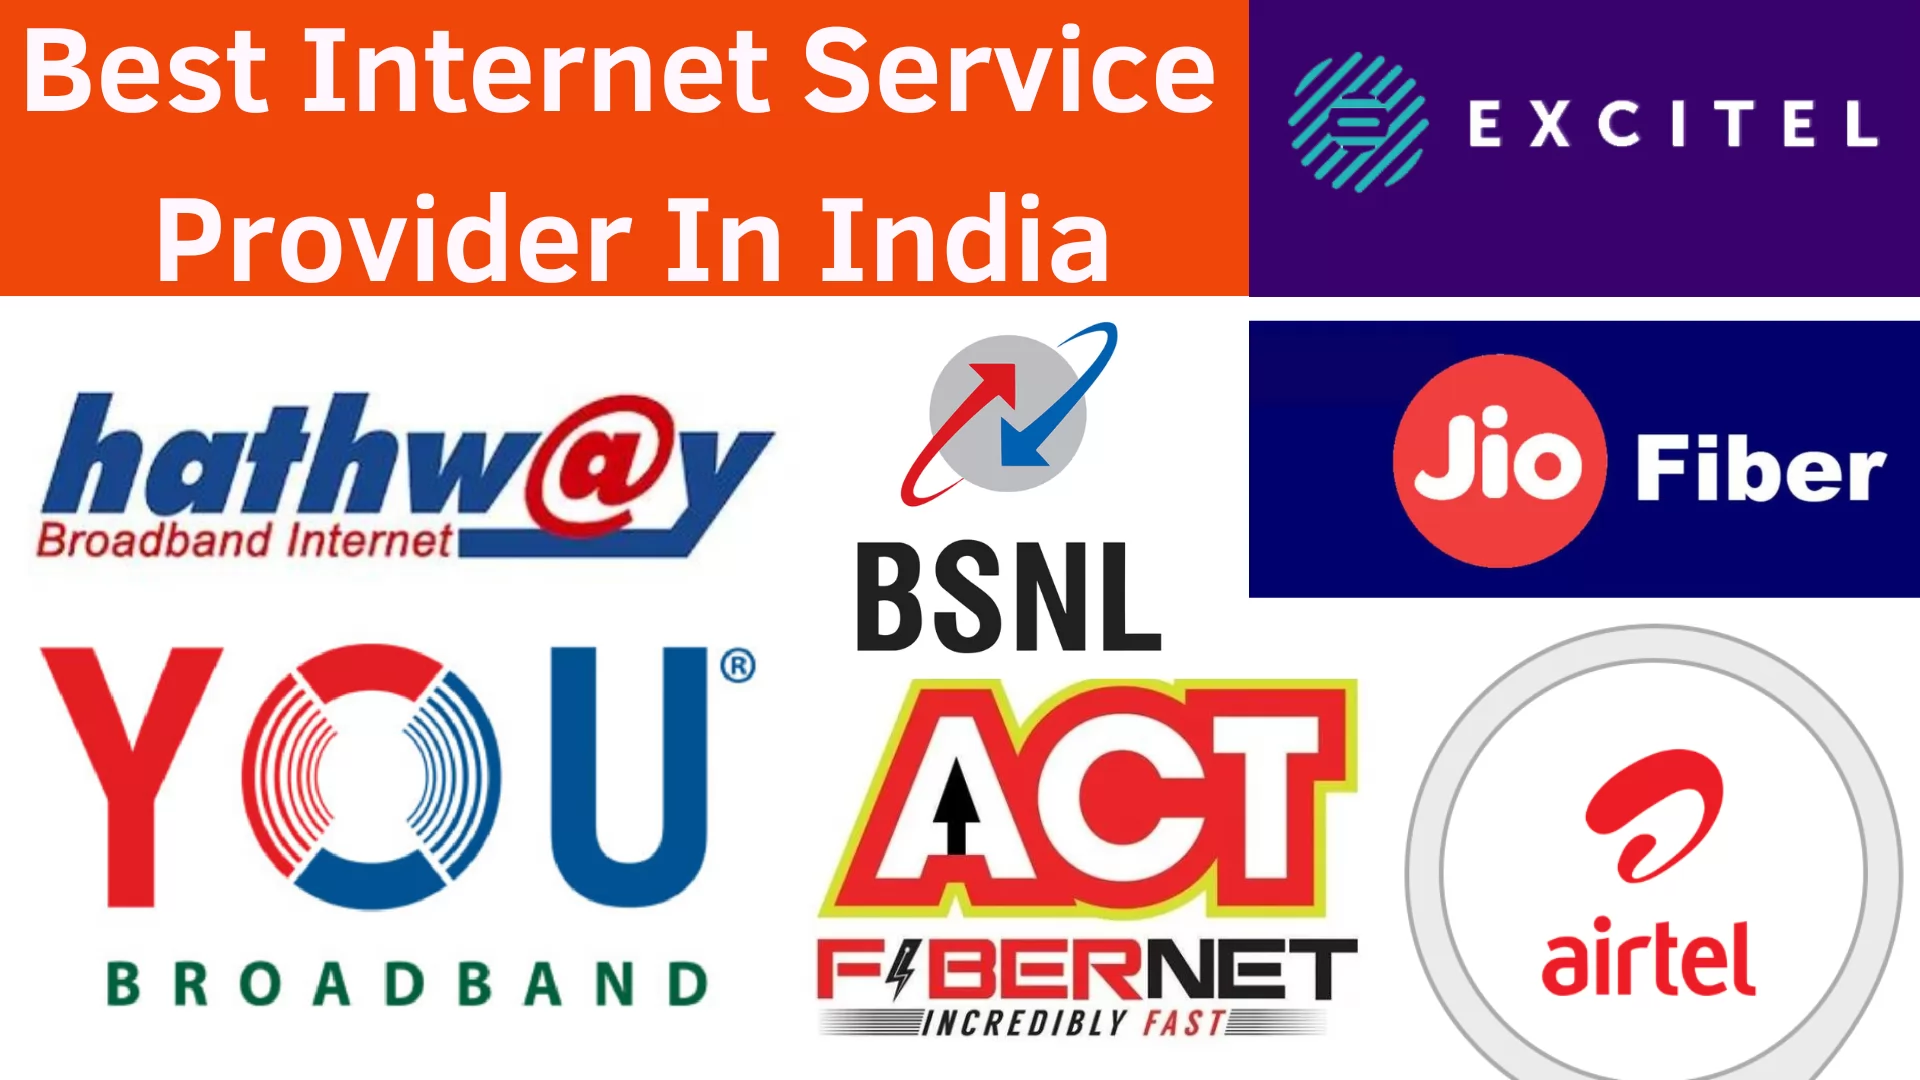 Internet Service Provider Companies in India